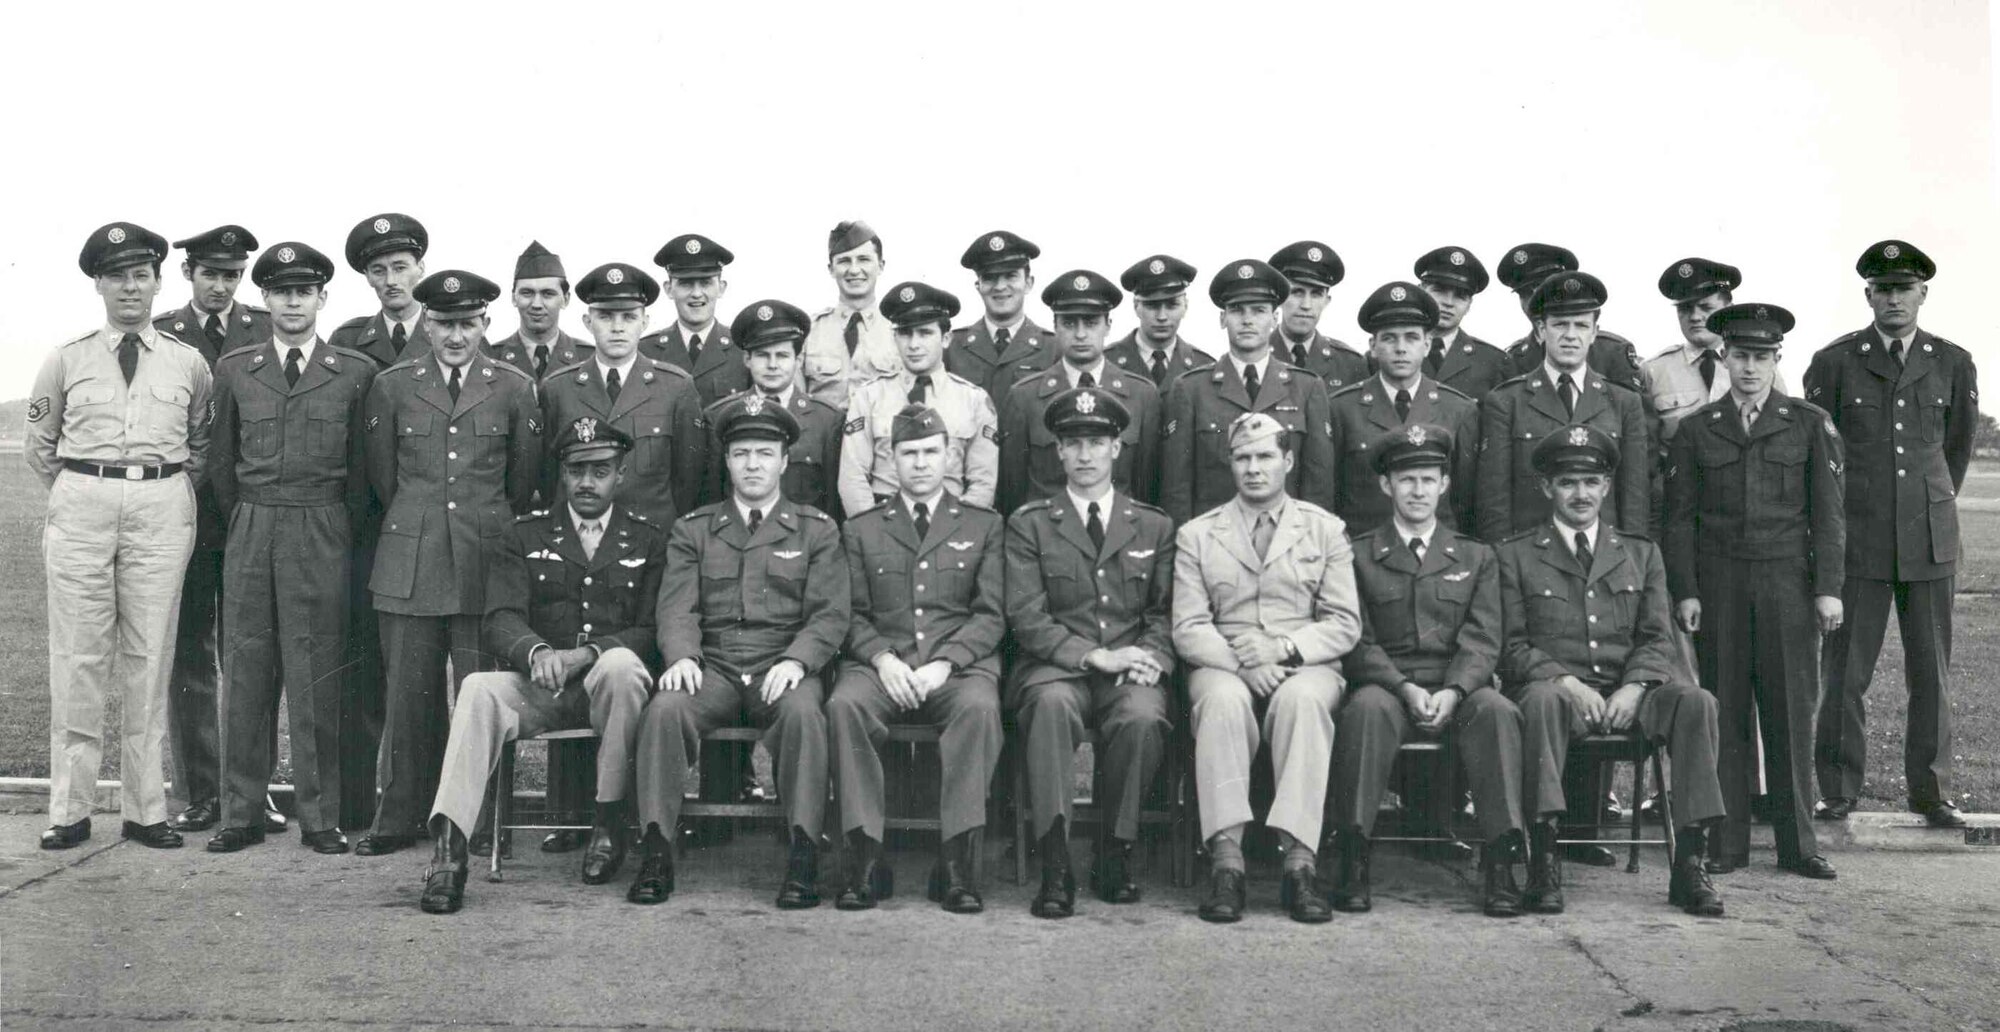 28th Weather Squadron Detachment 28-1, Burtonwood Depot, 1951; then-Lt Rowe at far left, front row. (USAF photo)

